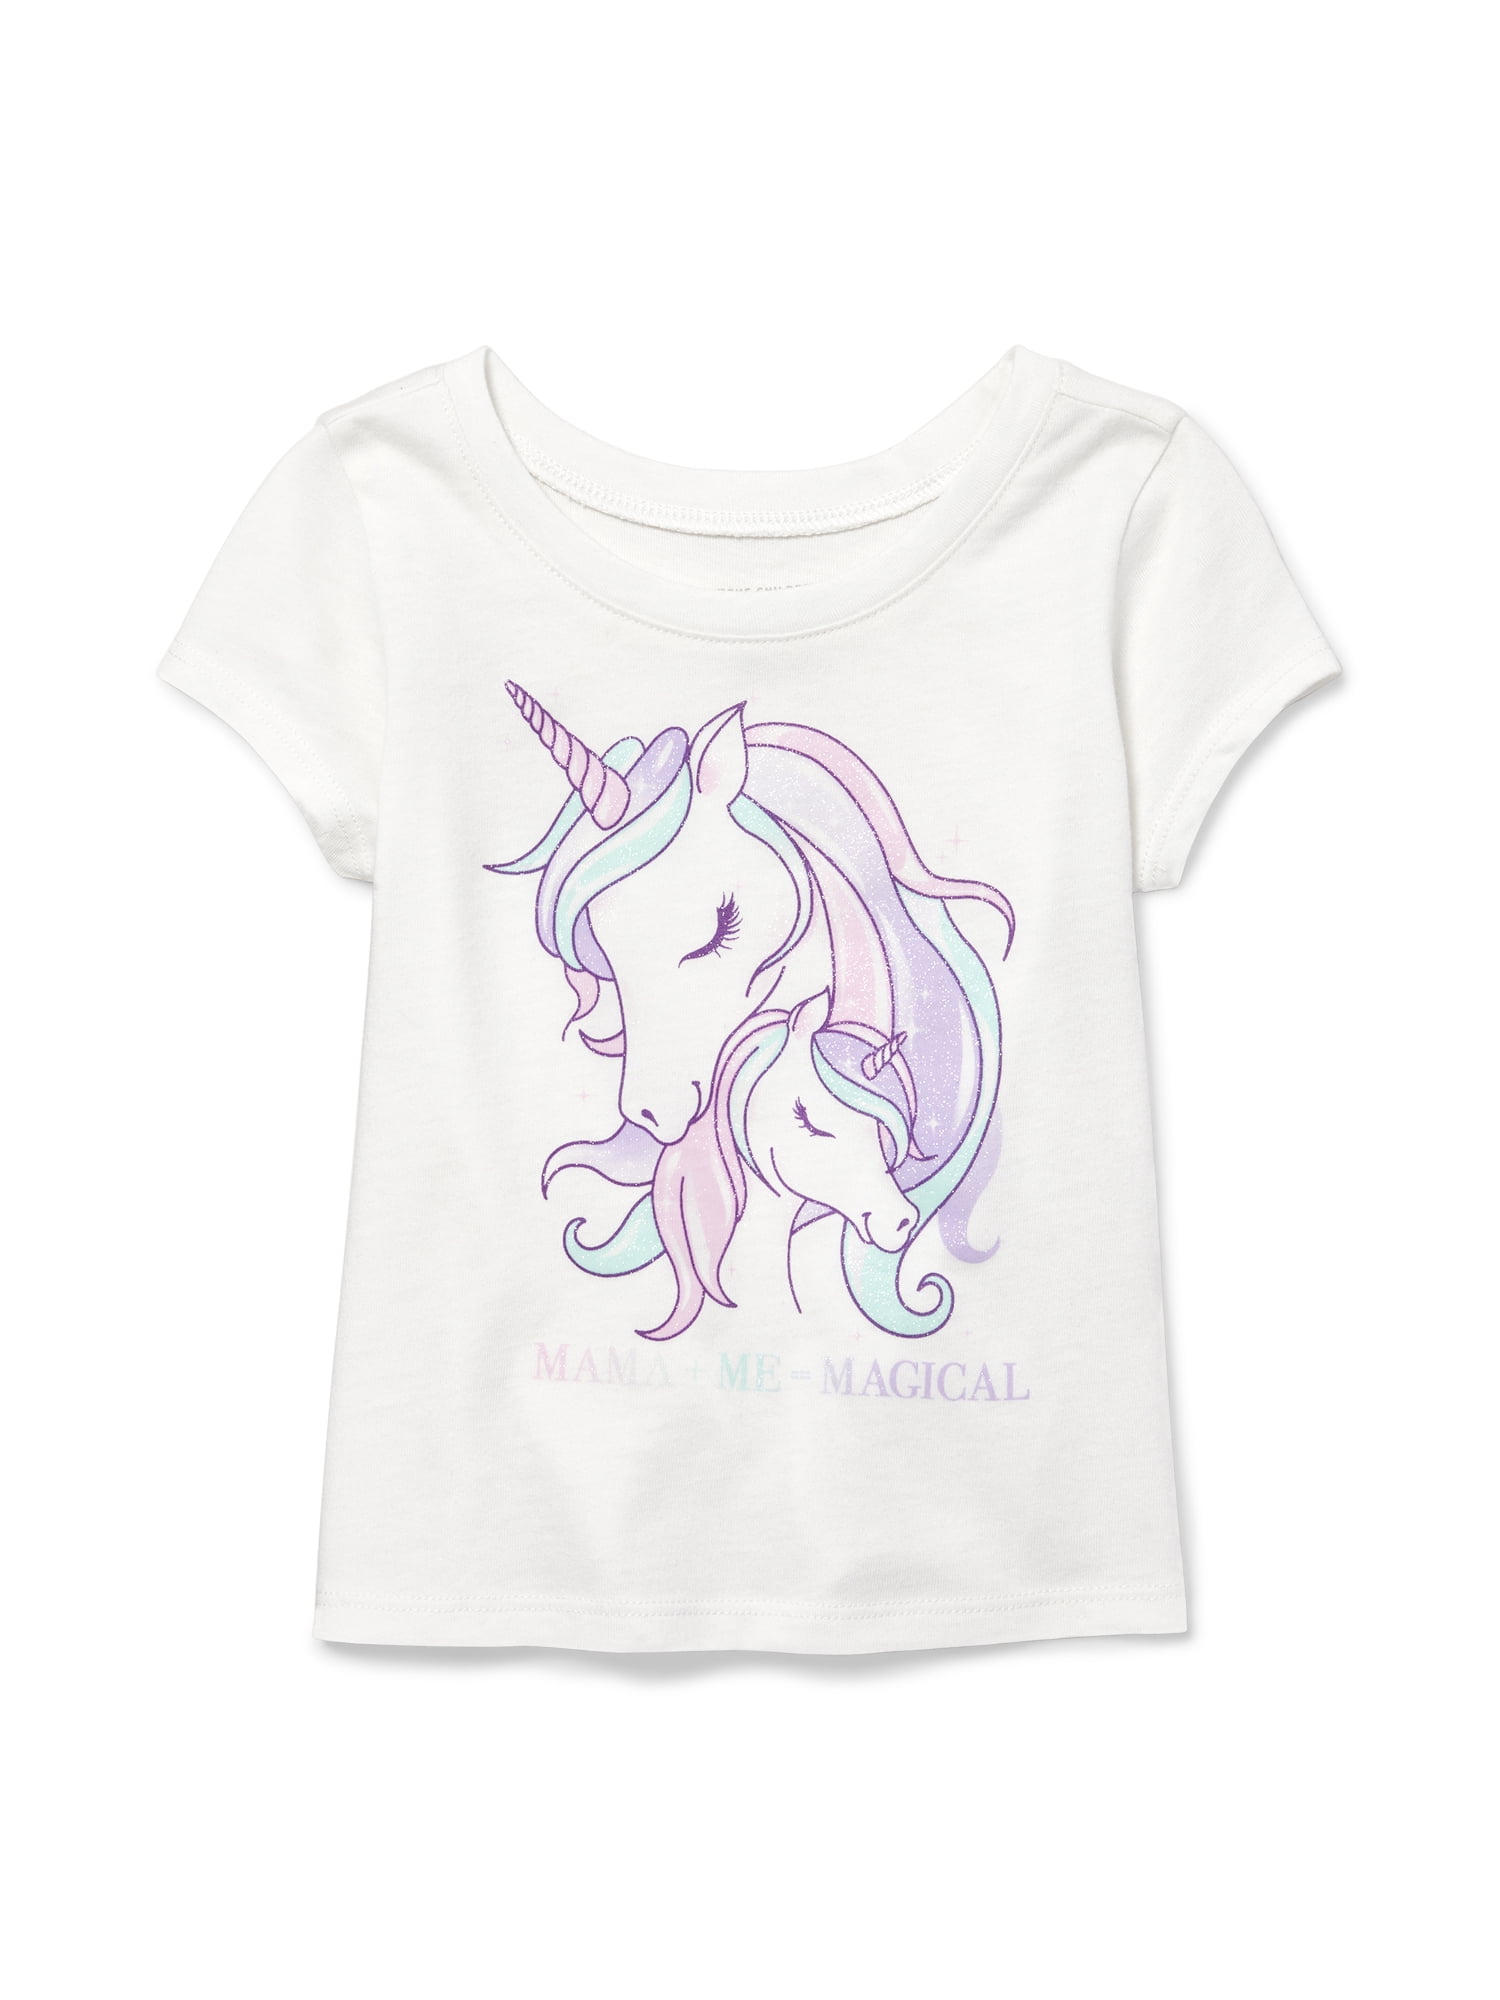 childrens place unicorn shirt